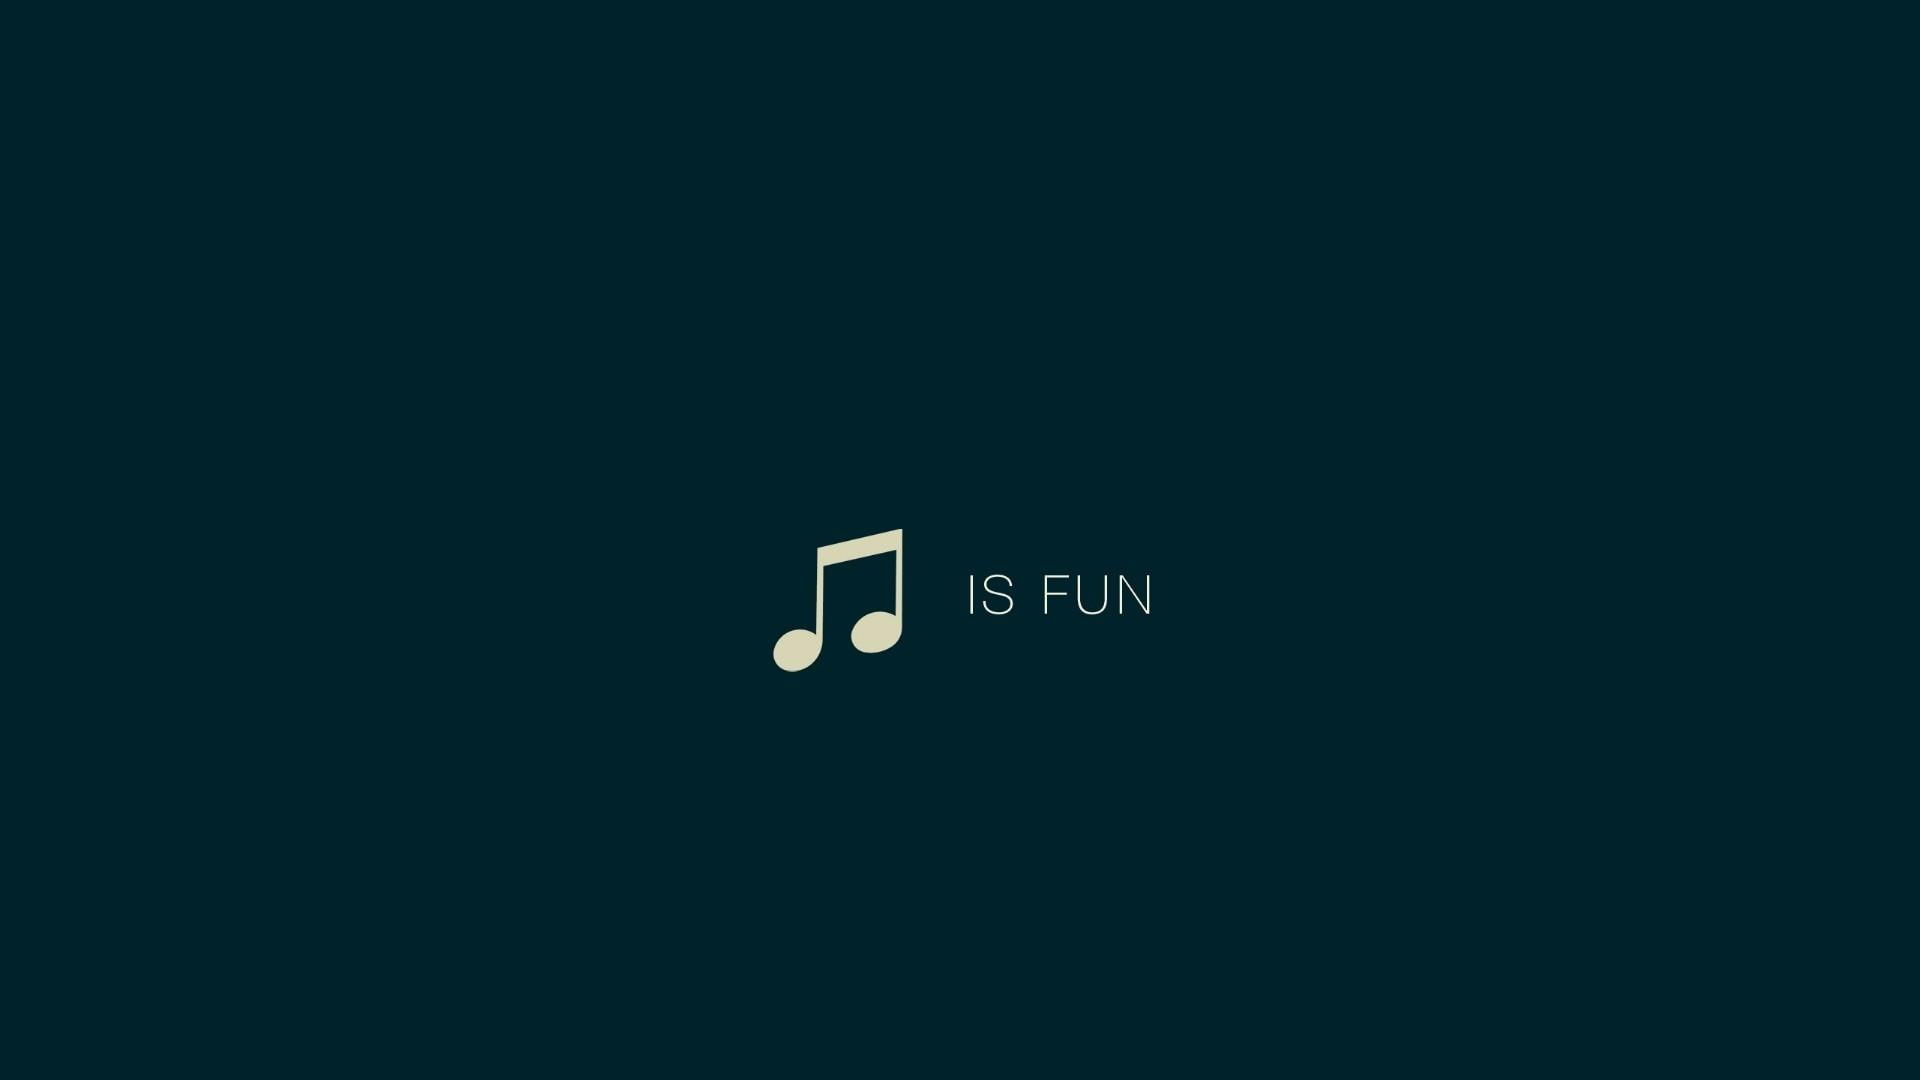 music, fun, funny, note, quotes, text, graphics design, symbol